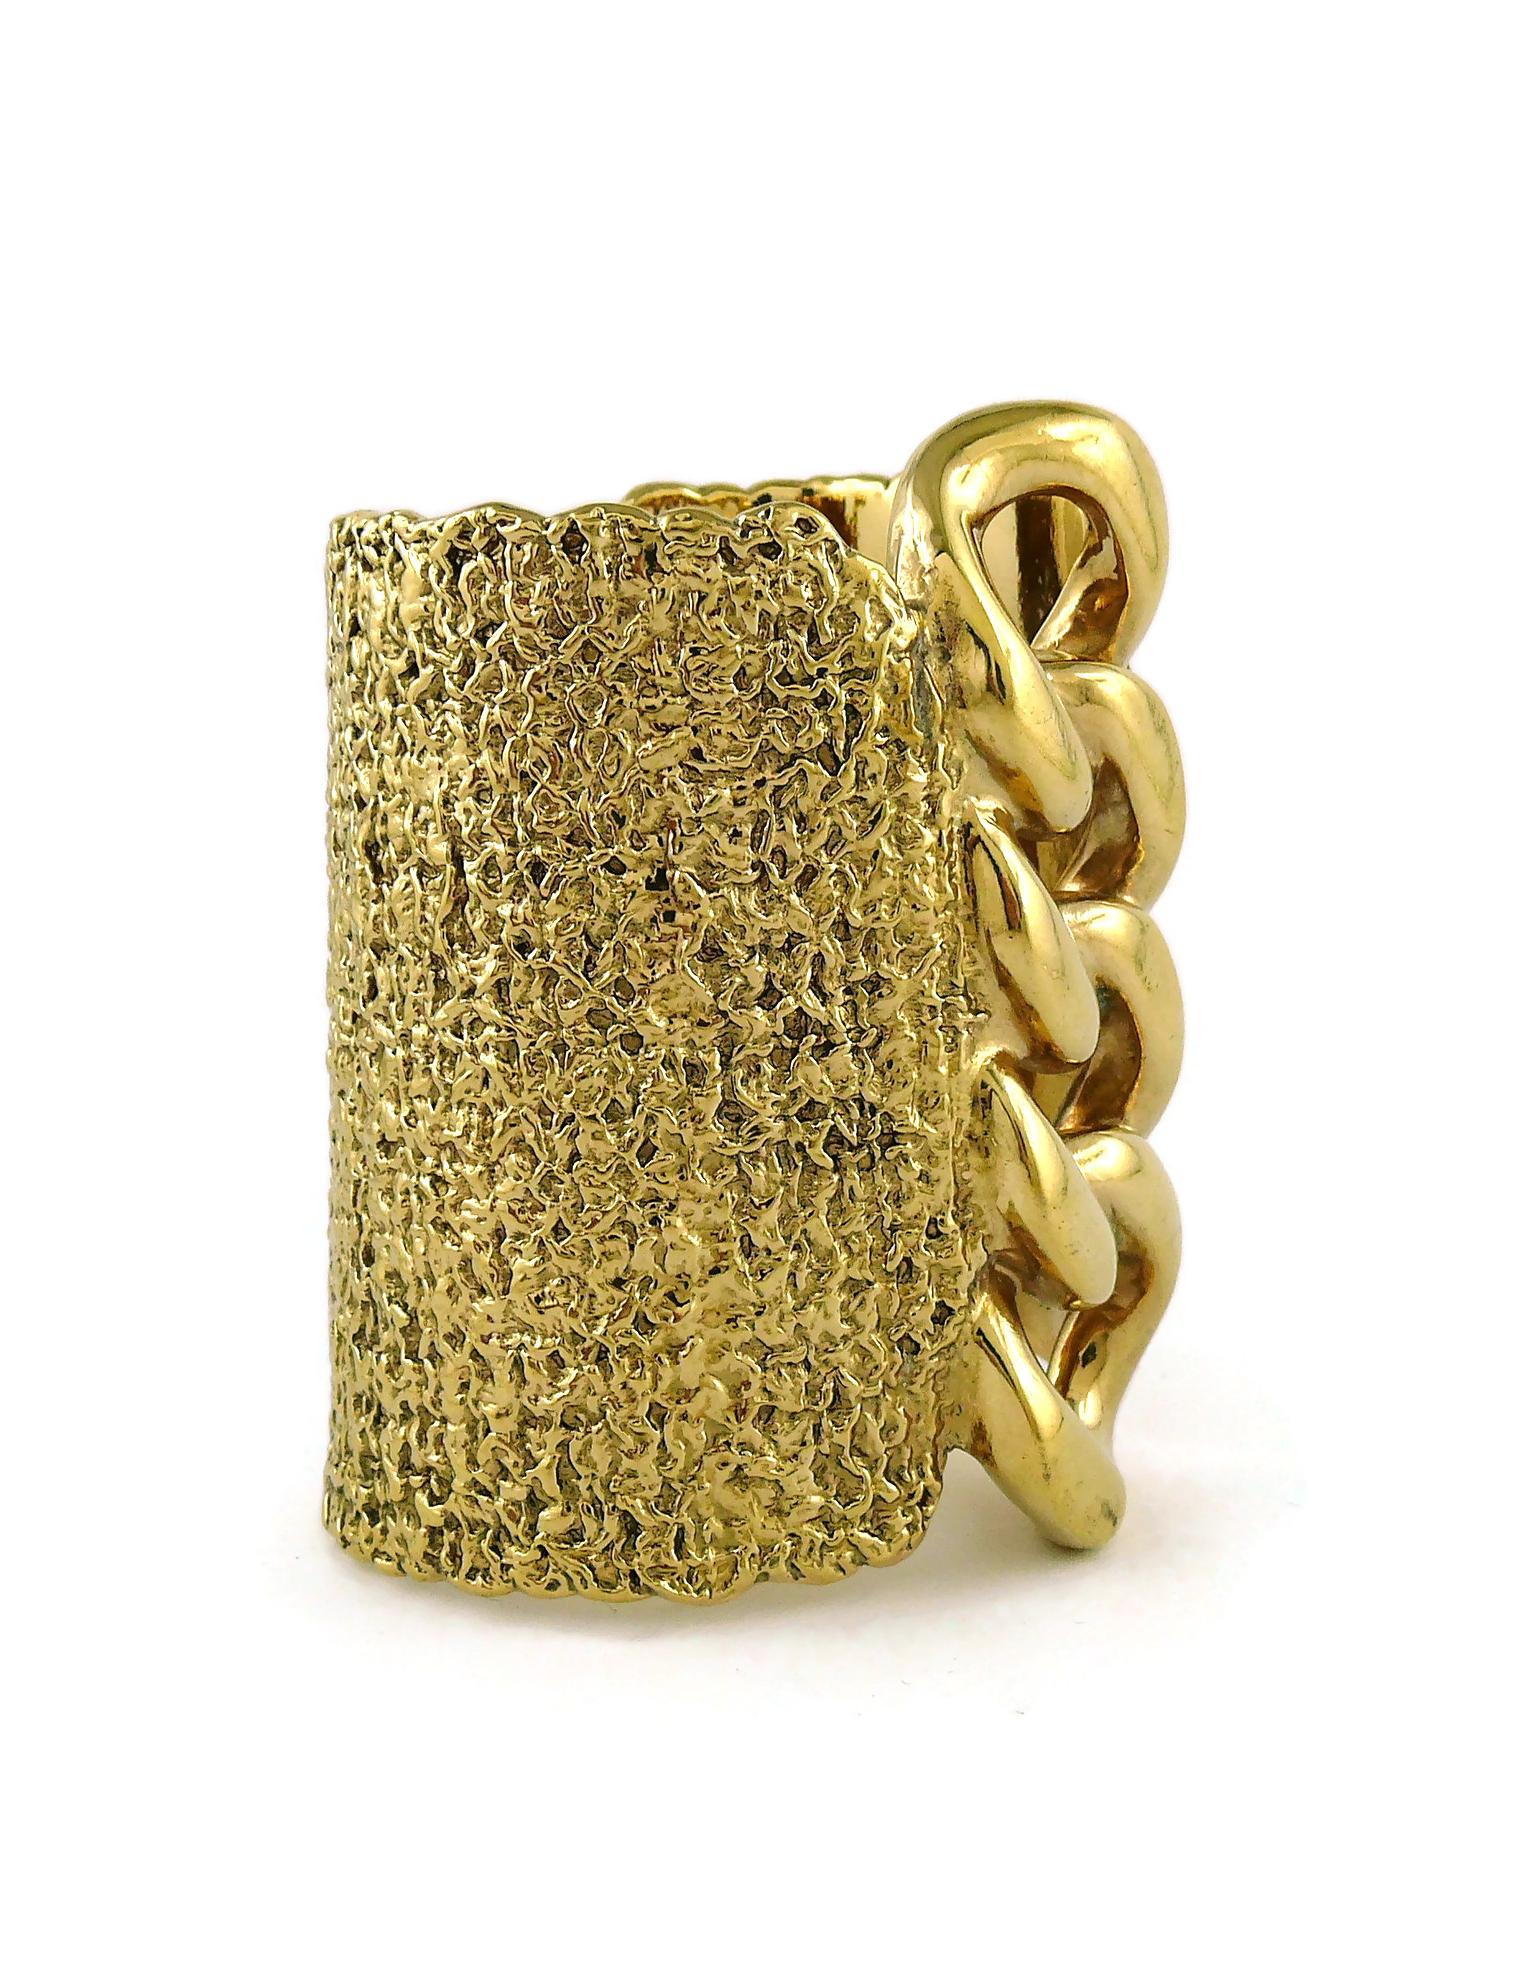 YVES SAINT LAURENT YSL Massive Gold Toned Chain Cuff Bracelet For Sale 1